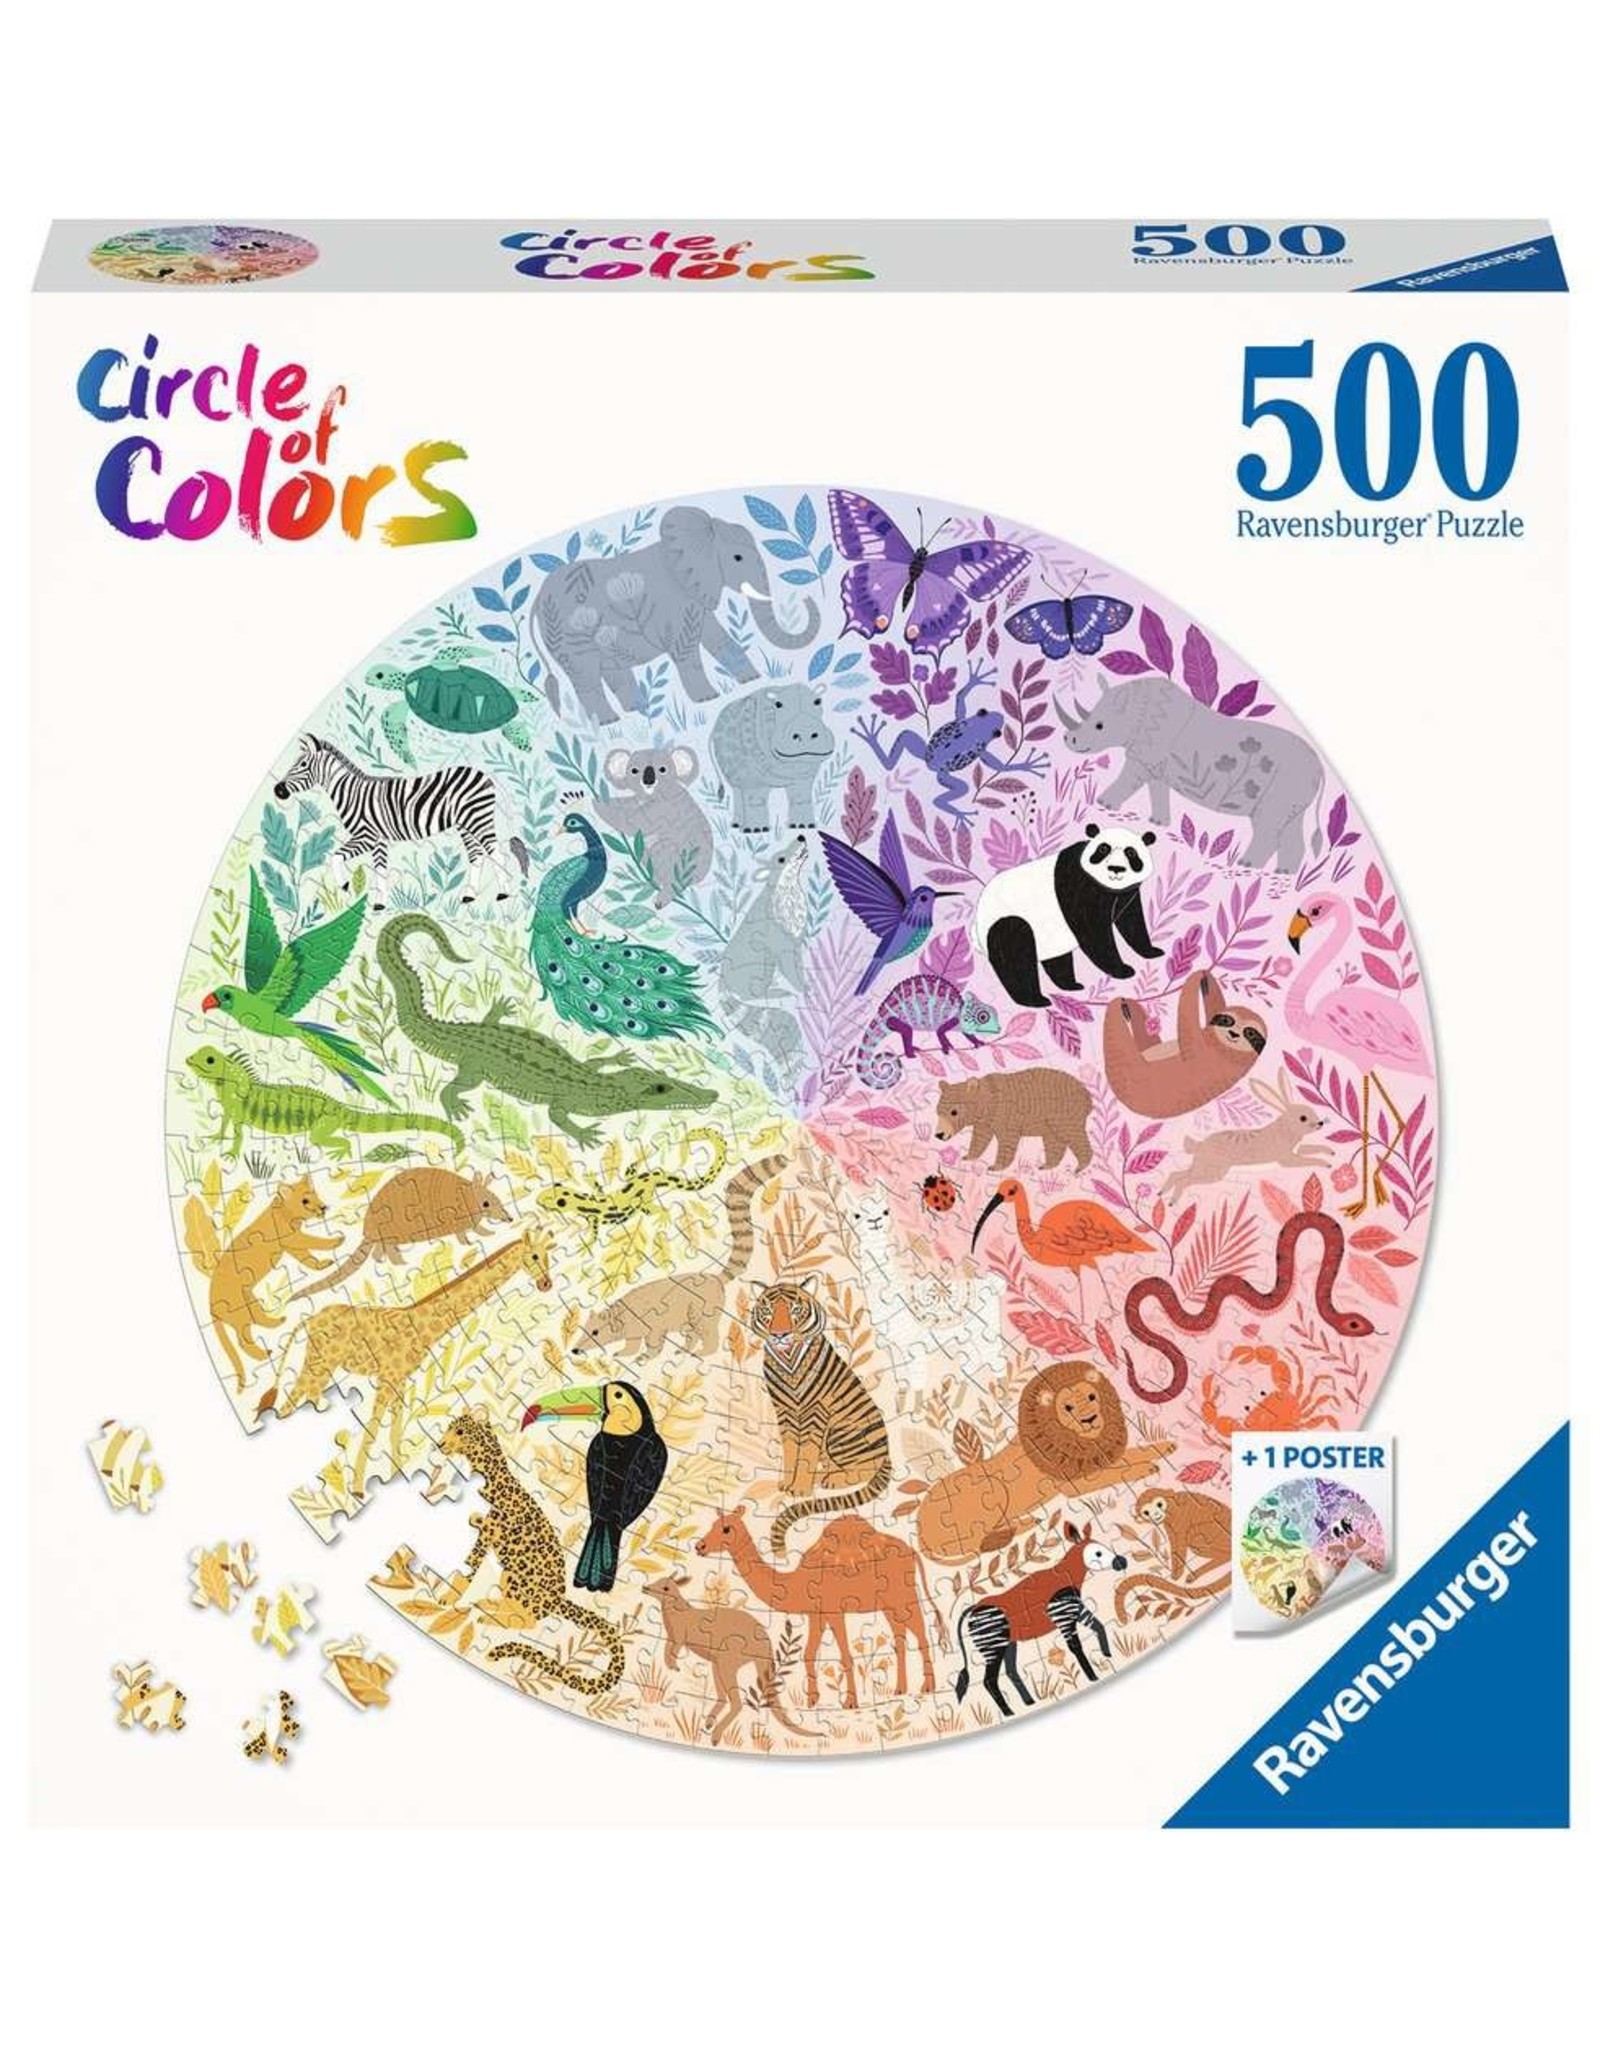 Ravensburger 500 pcs. Circle of Colors Animals Puzzle